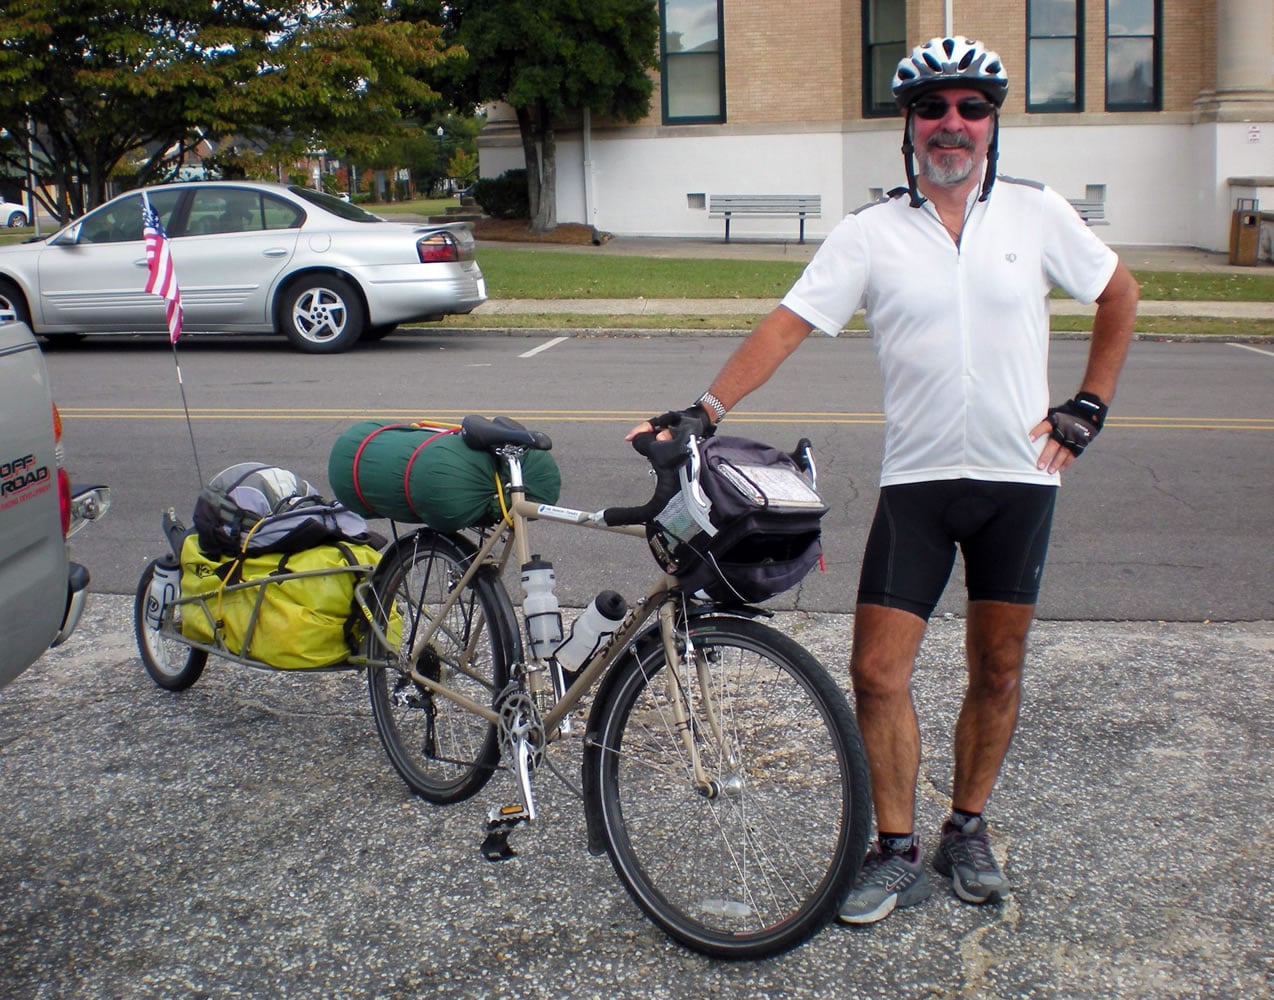 DAVID JONEs
David Jones, shown here in October 2010, toward the end his cross-country bike trip. His 2012 ride, benefitting Share, will be far longer.